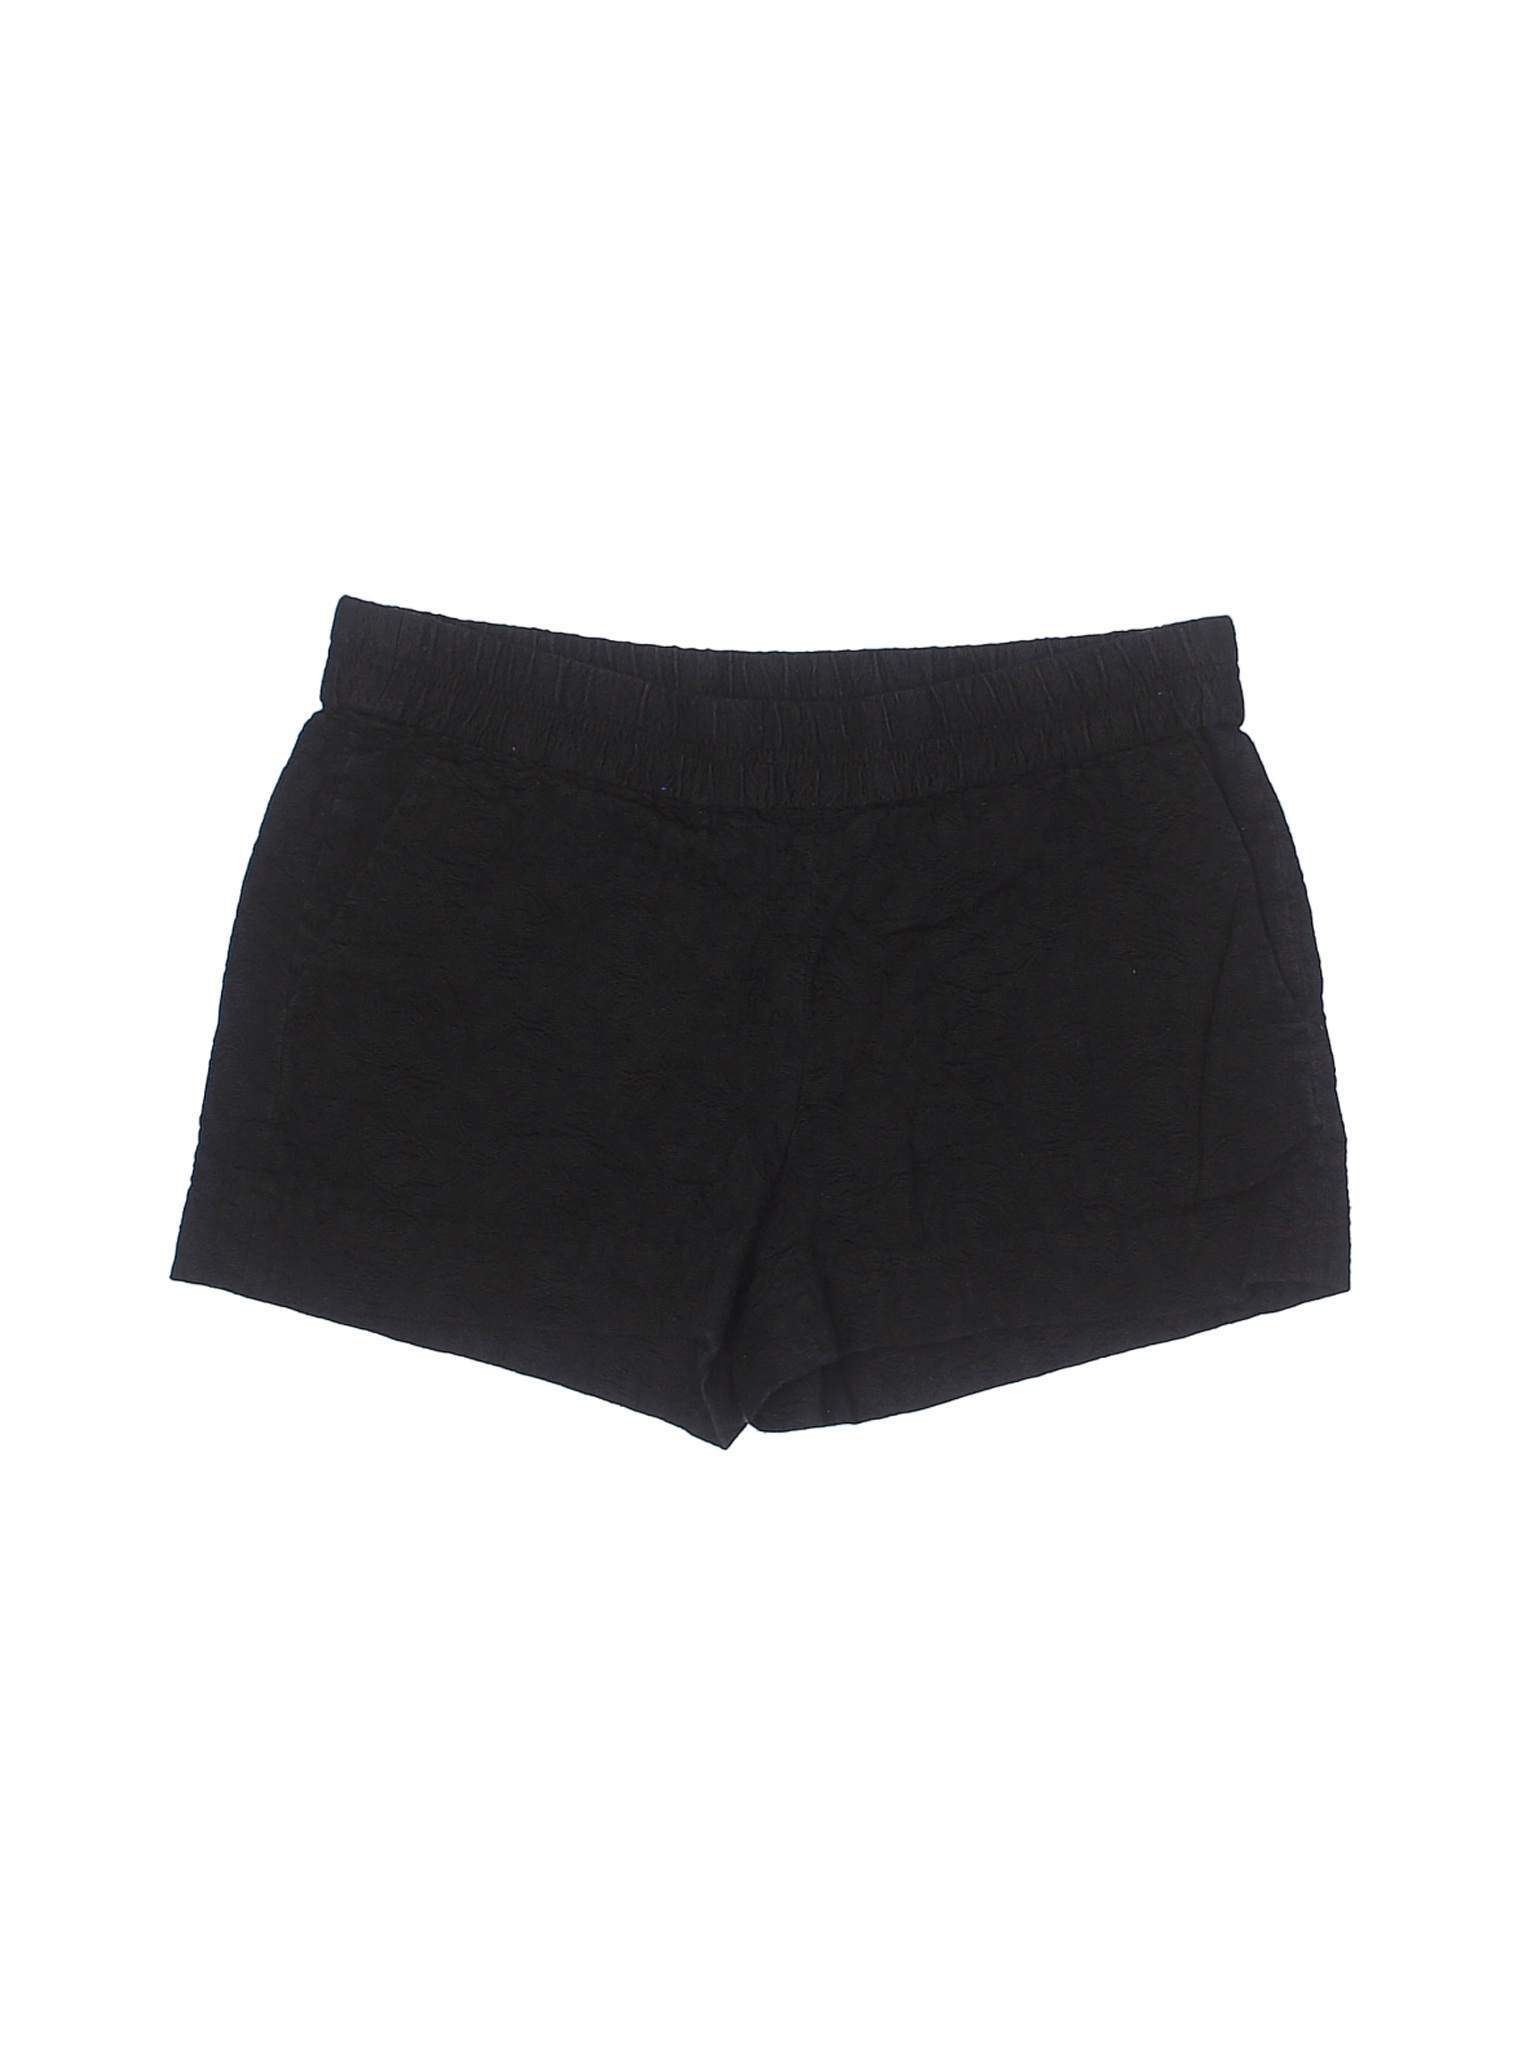 J.Crew Women Black Shorts 6 | eBay